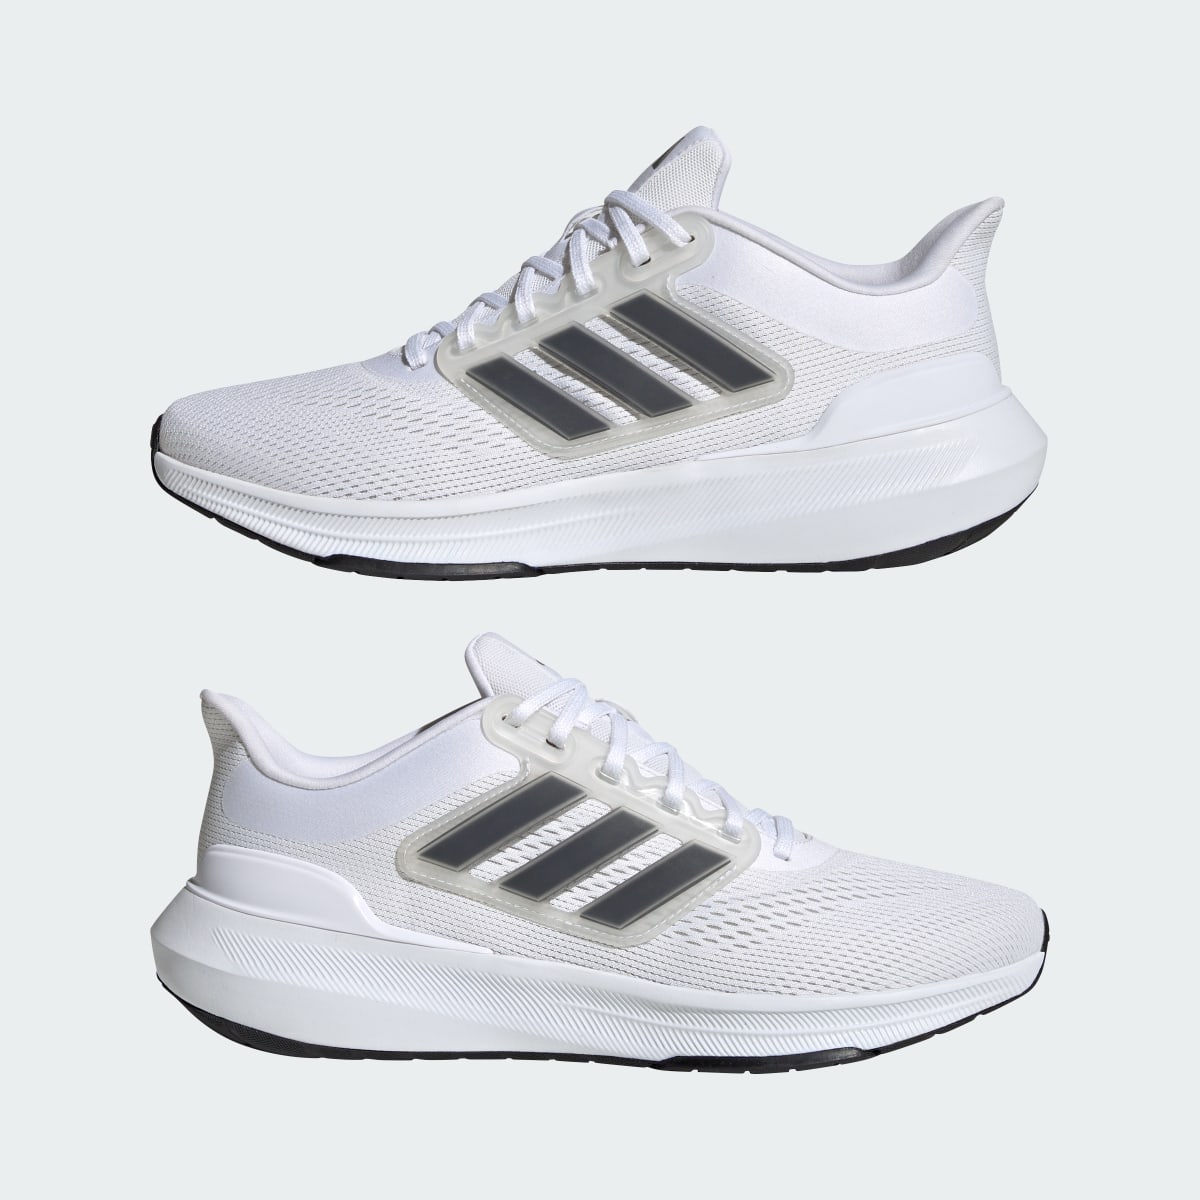 Adidas Ultrabounce Ayakkabı. 8